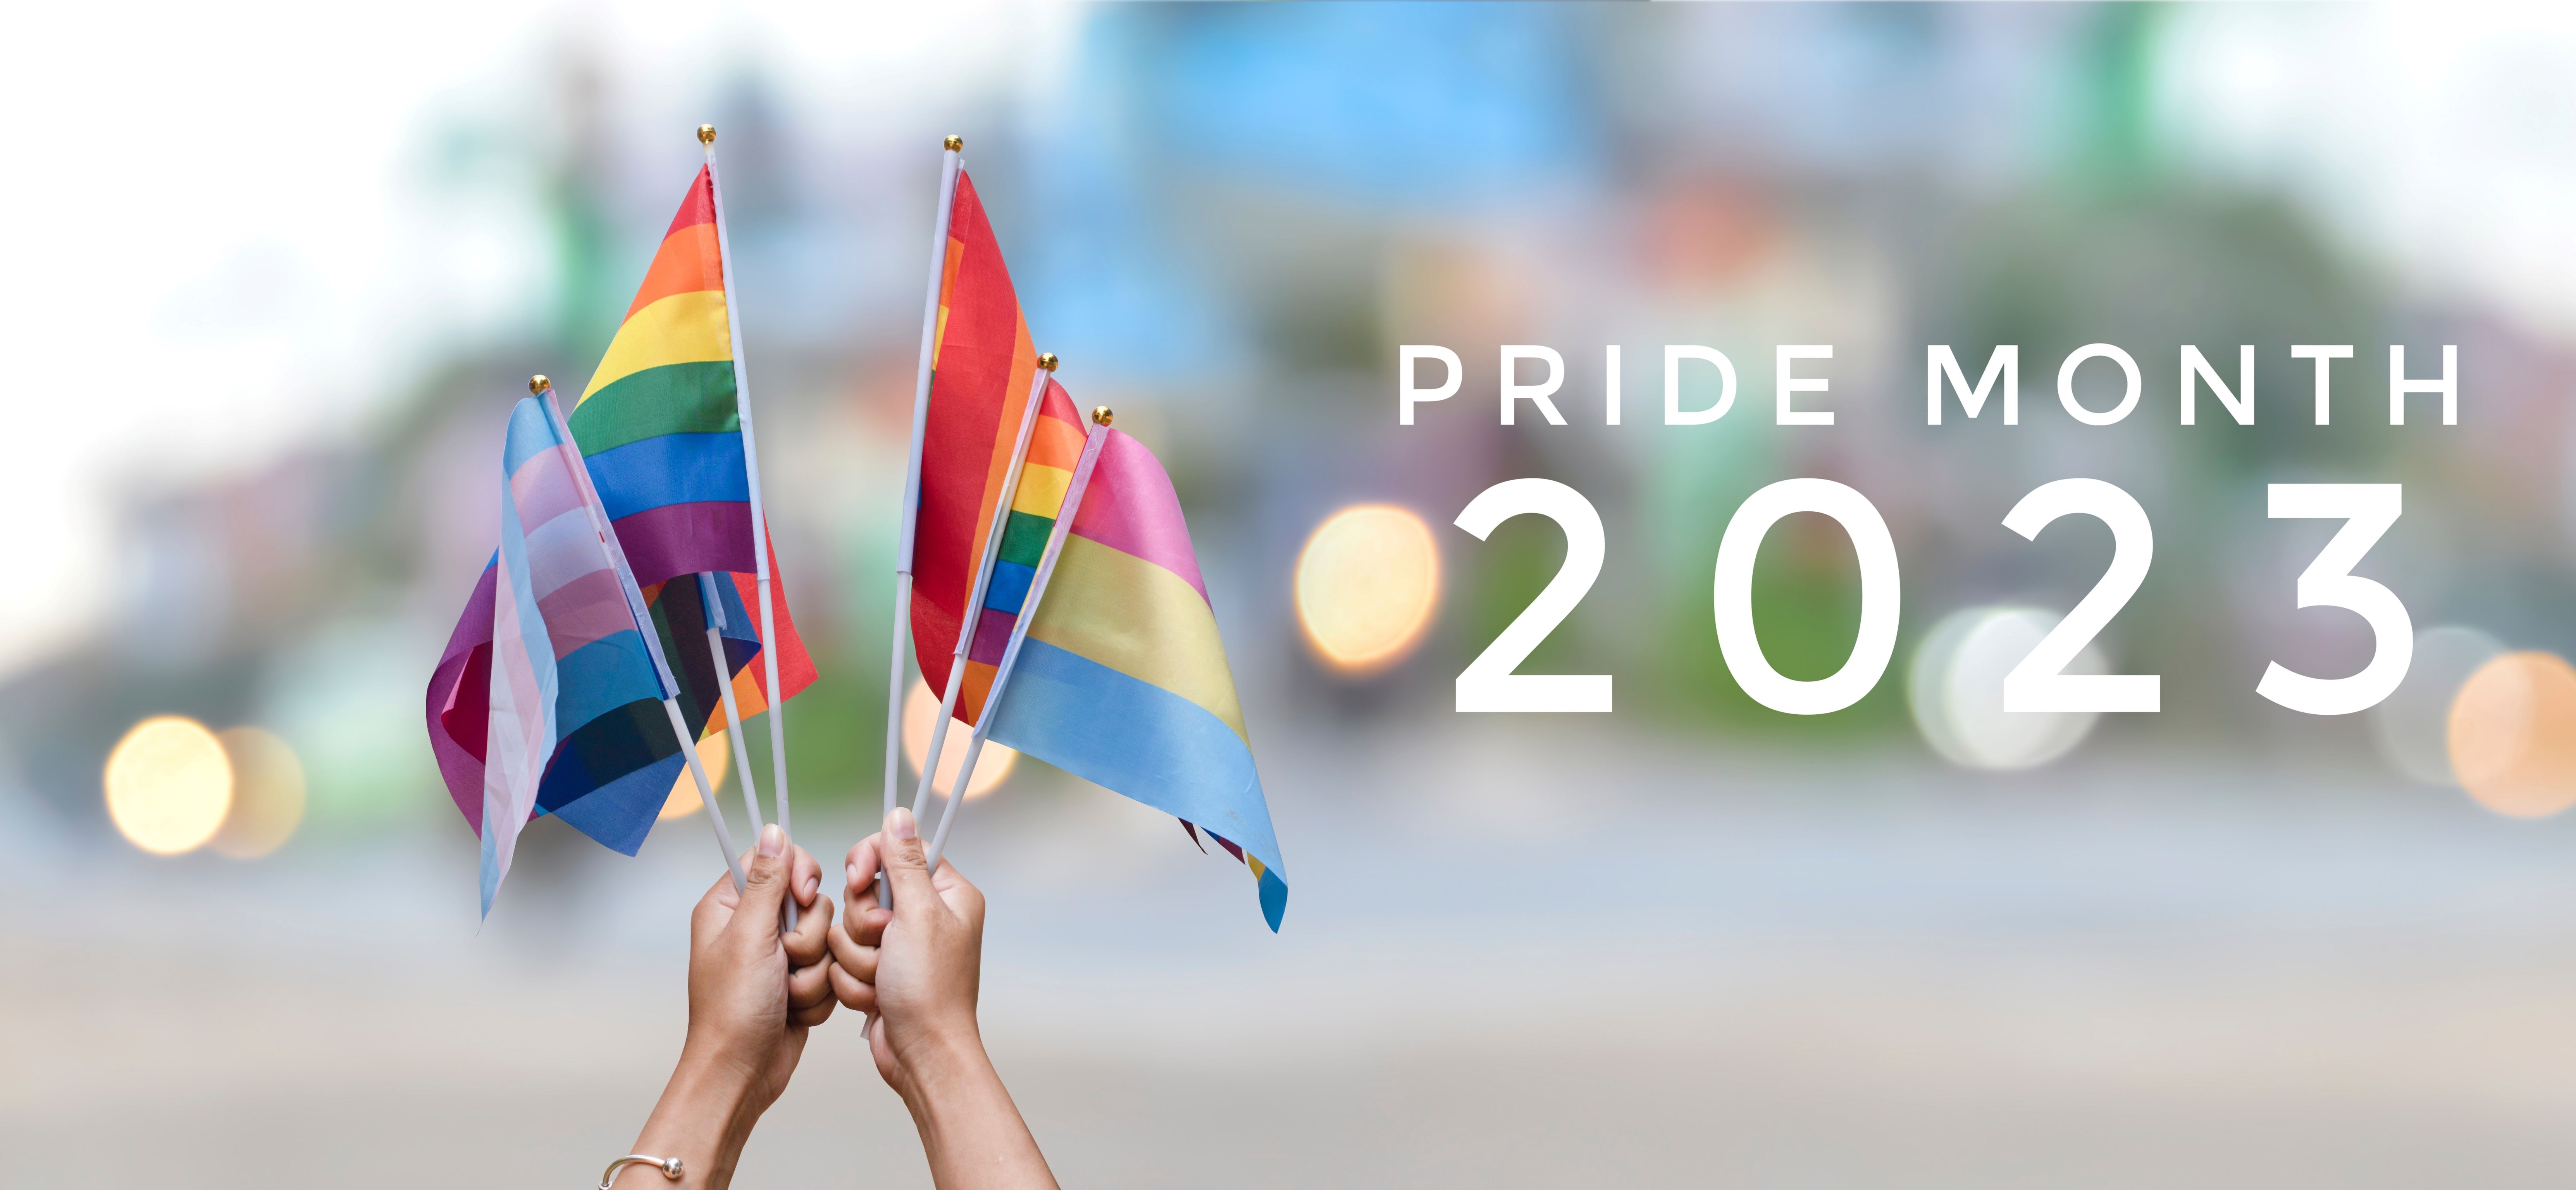 Pride month 2023